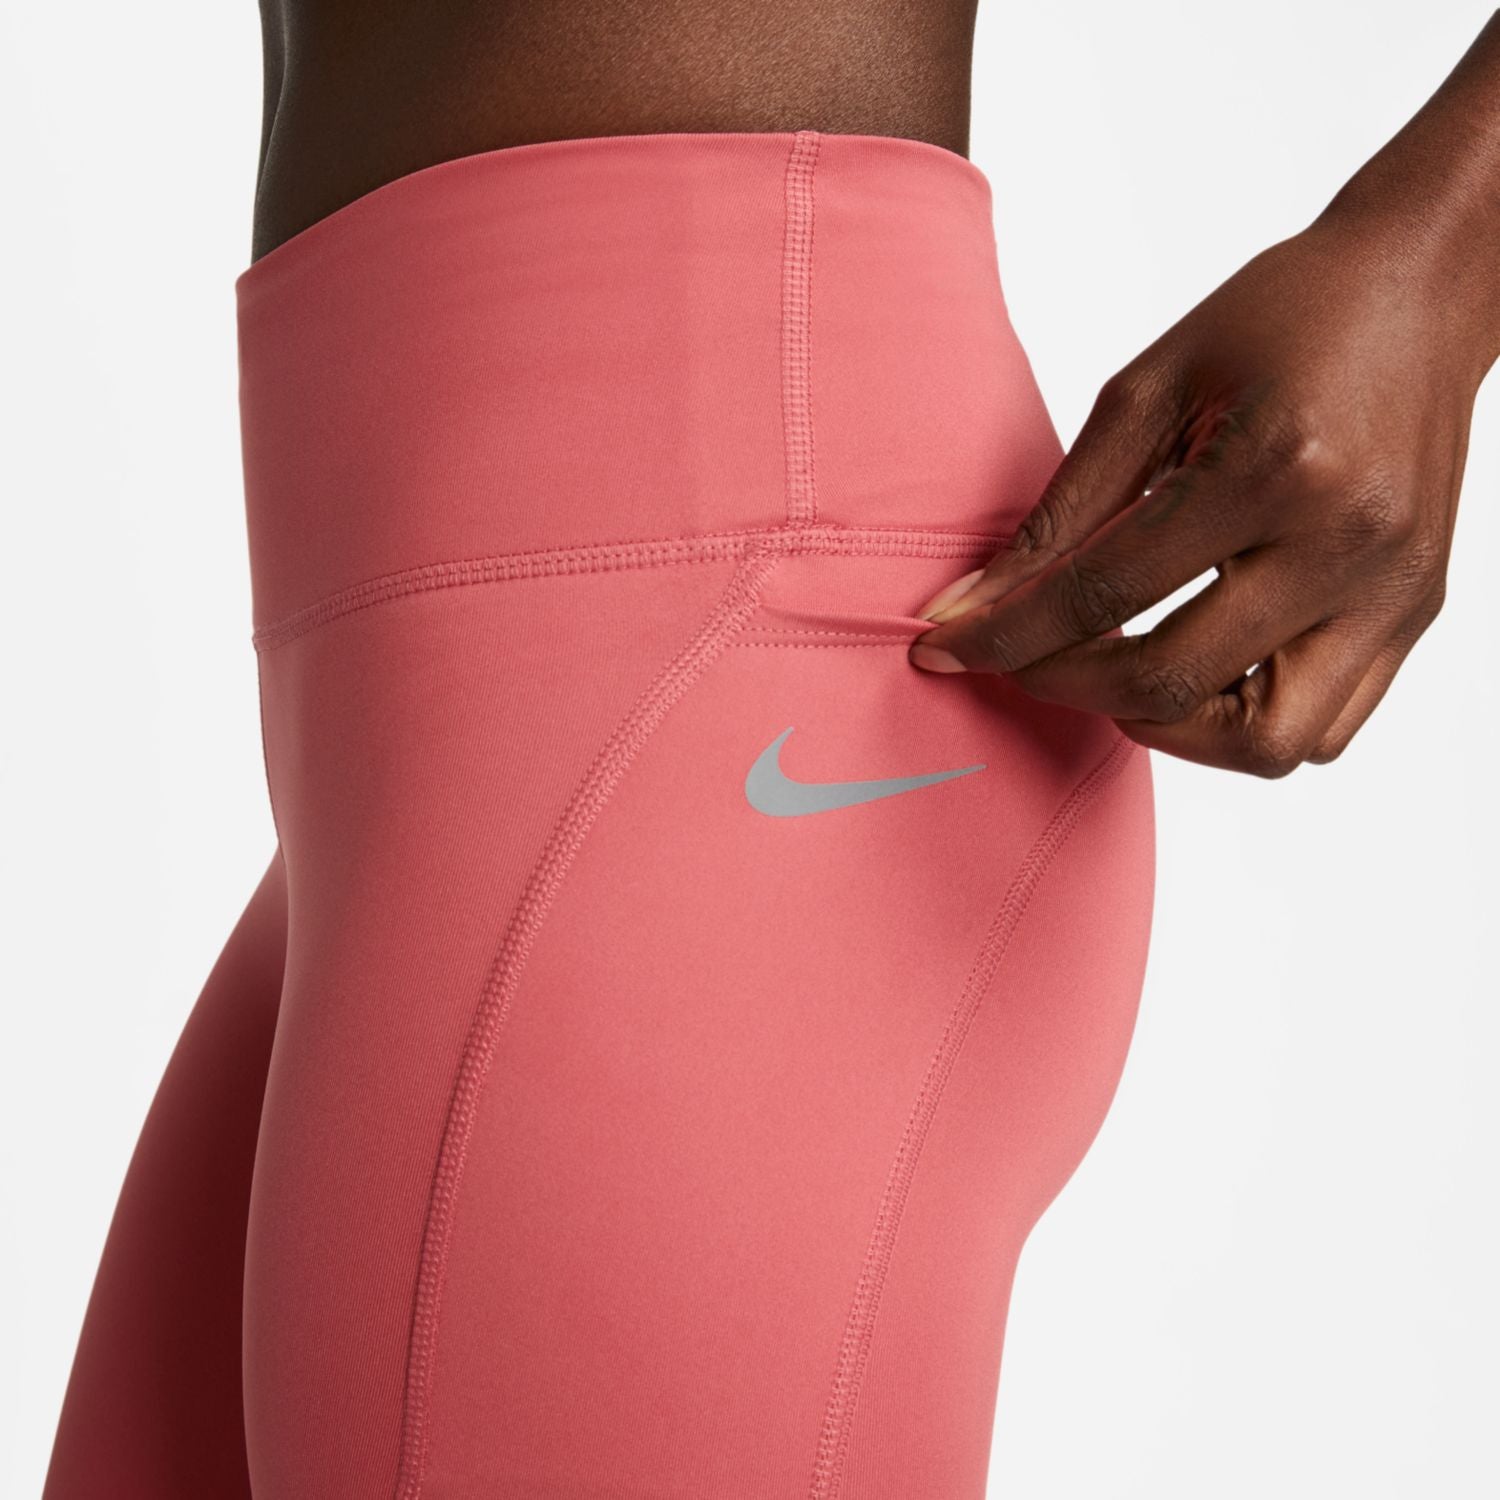 Nike Nsw Just Do It Leggings 'Pink' - CZ8534-621